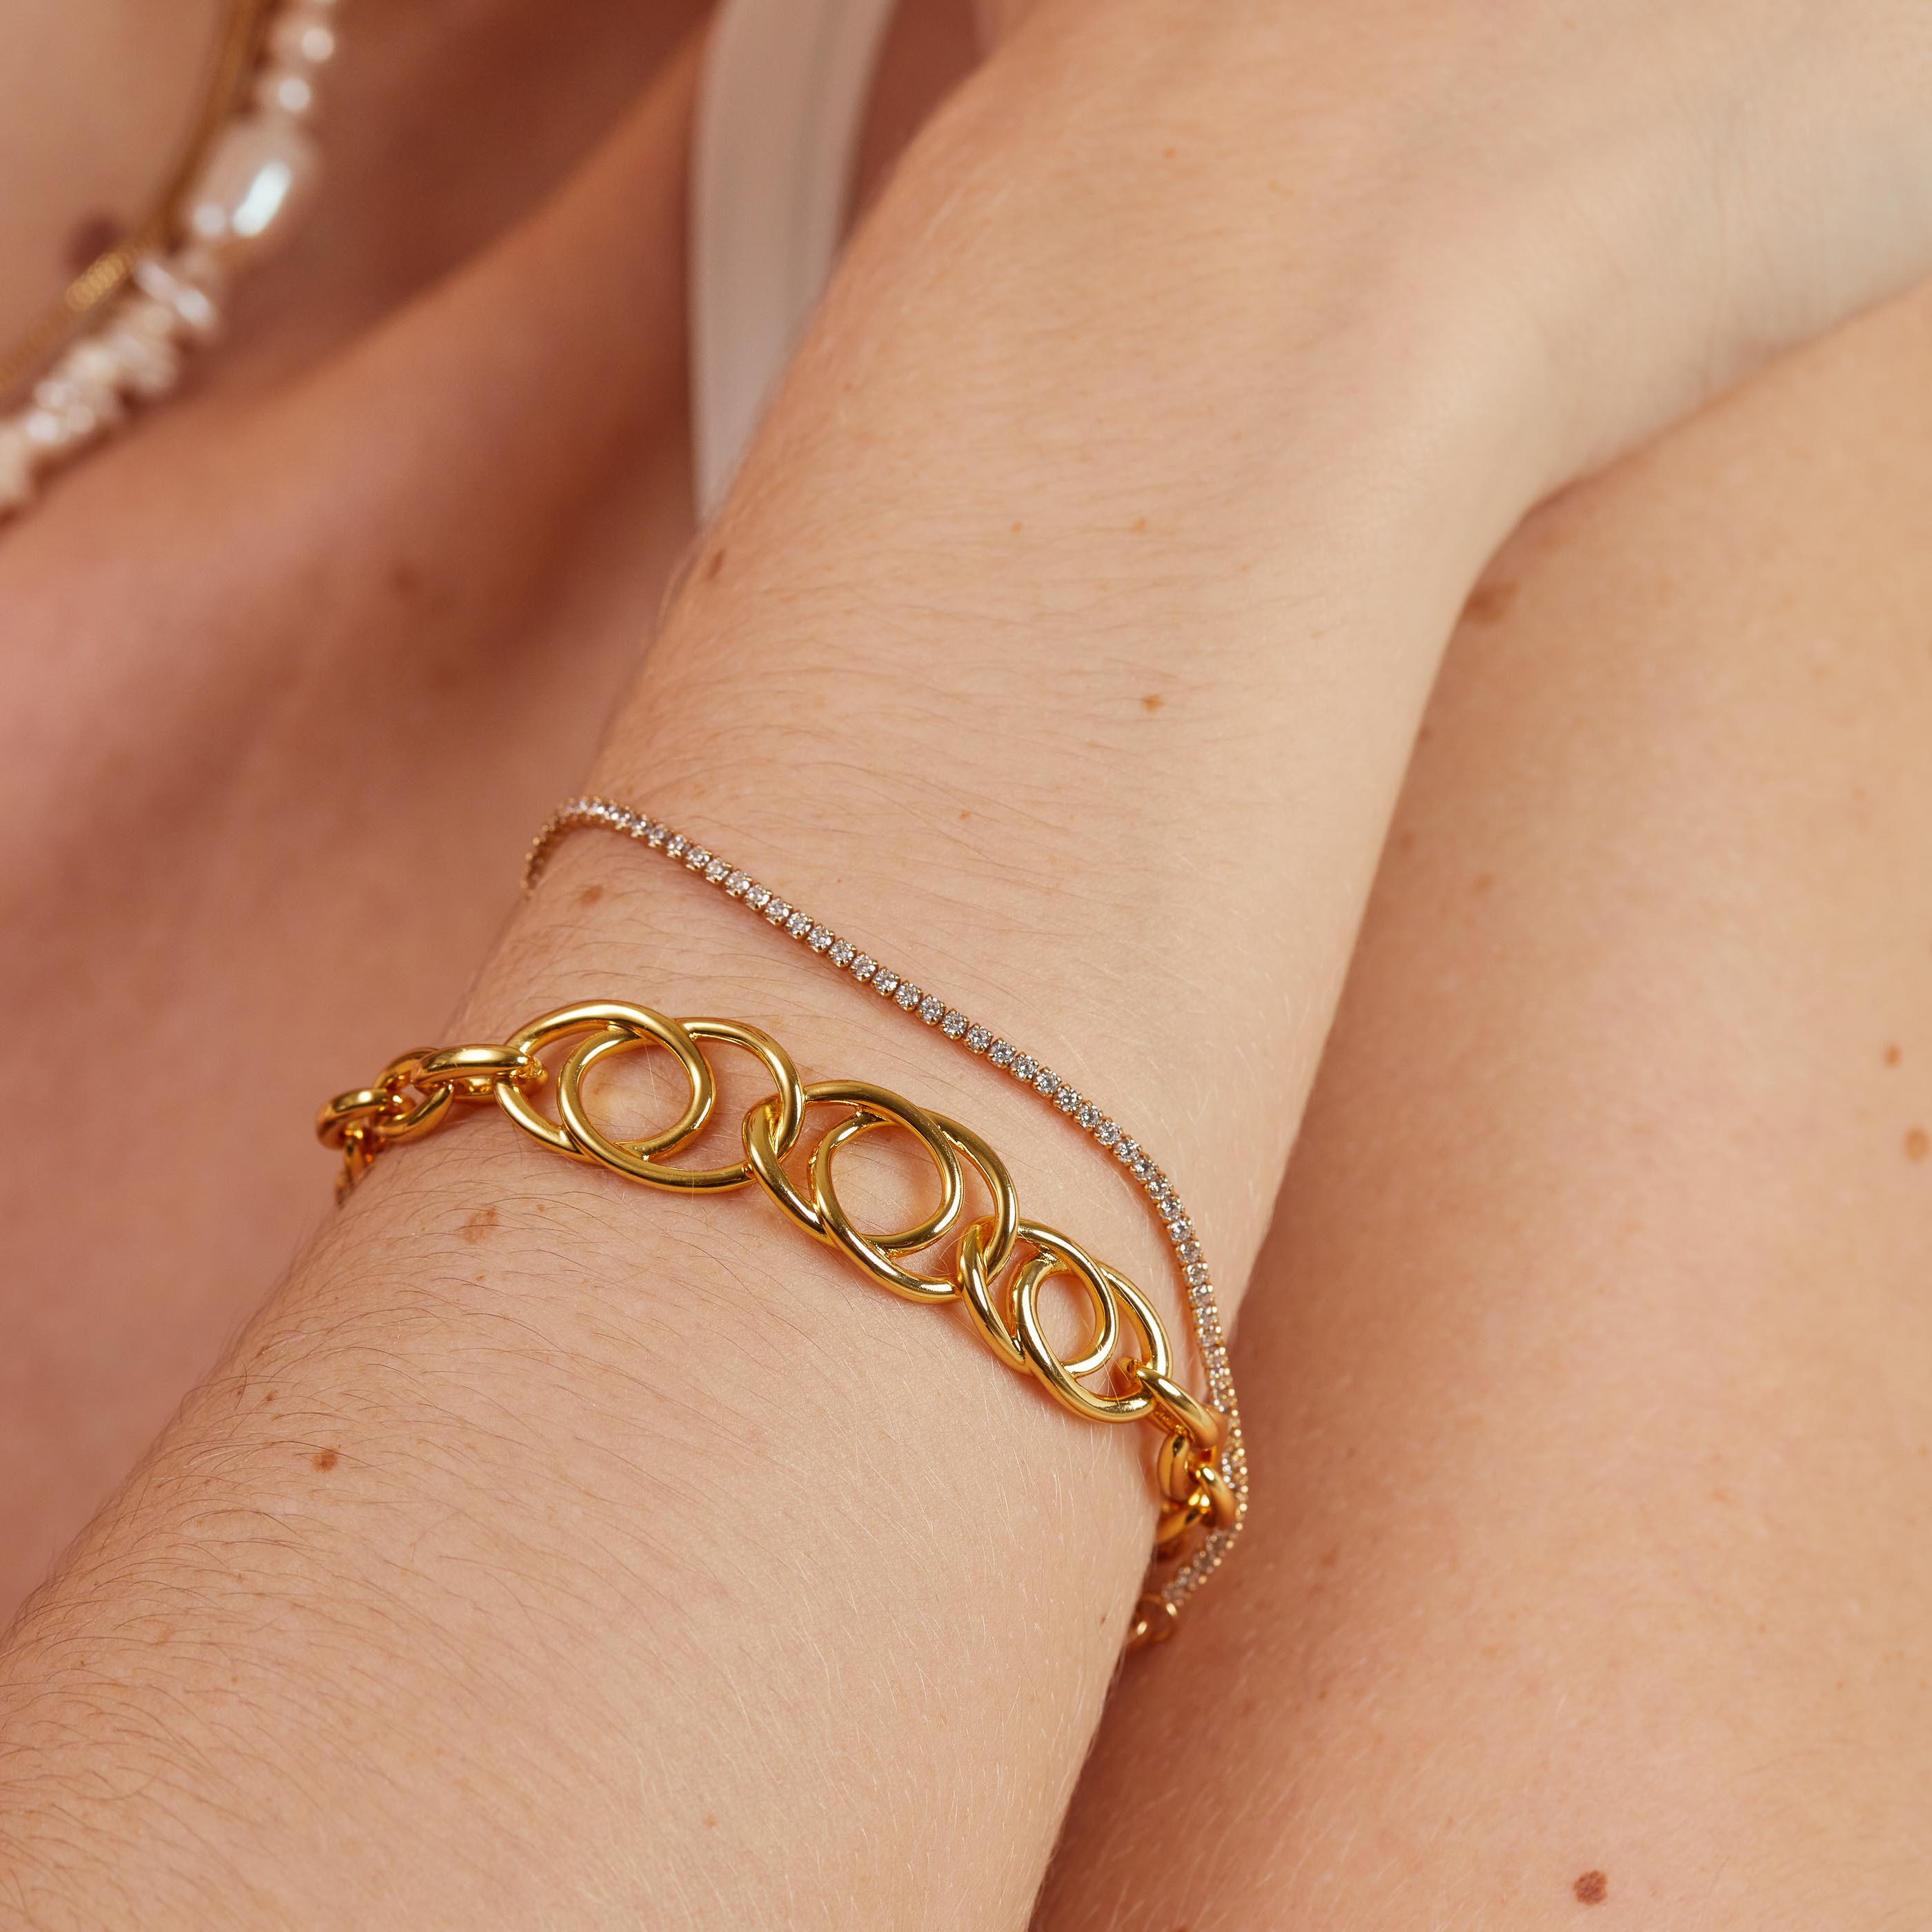 Orbit Chain Bracelet in Gold worn with gold tennis bracelet